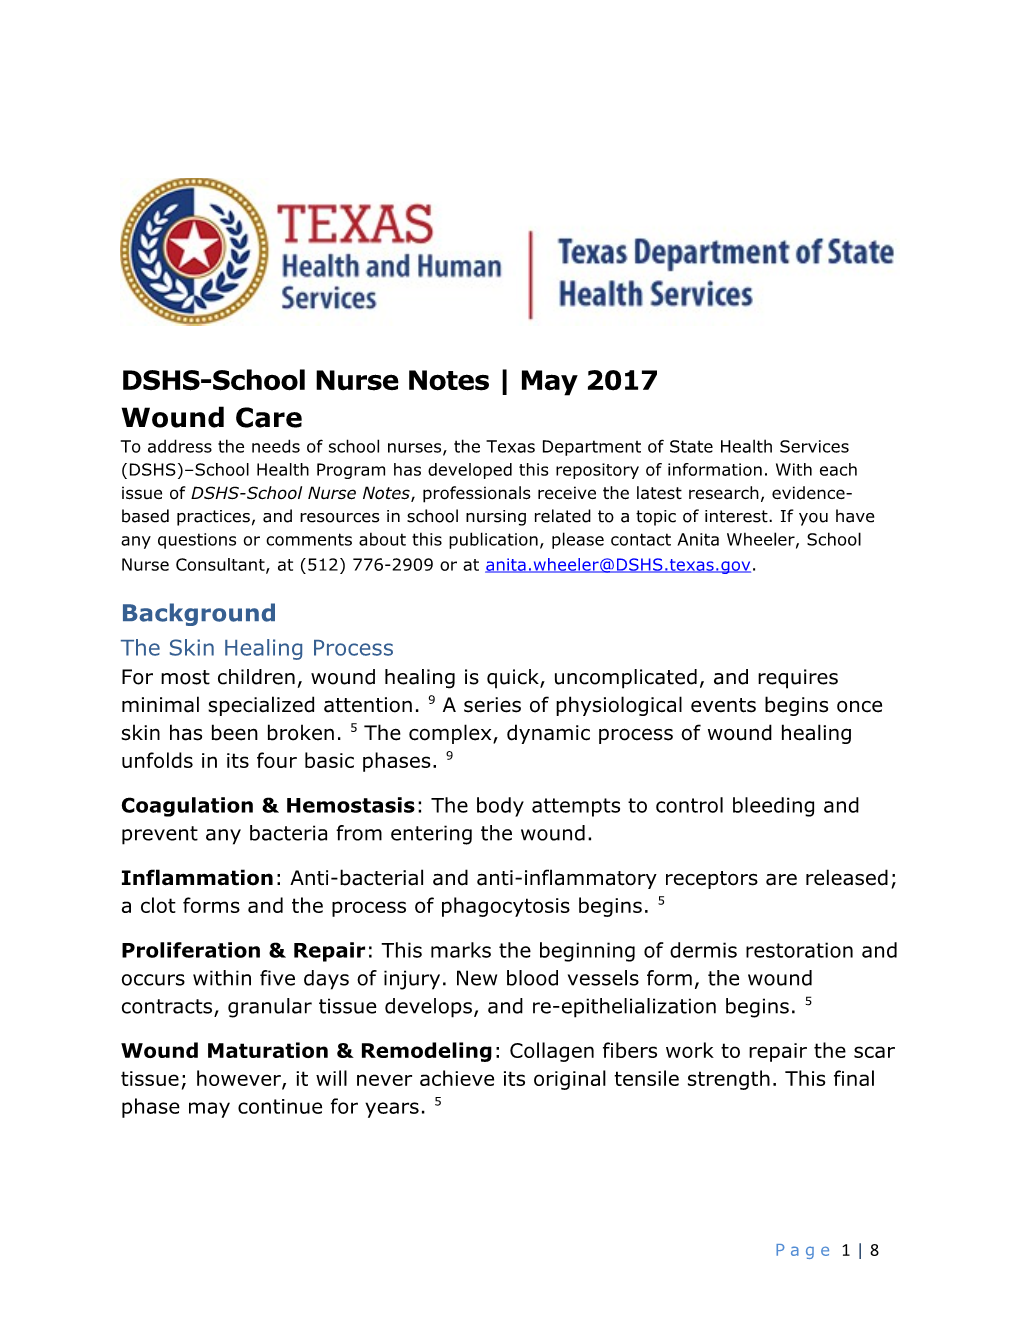 DSHS-School Nurse Notes May 2017